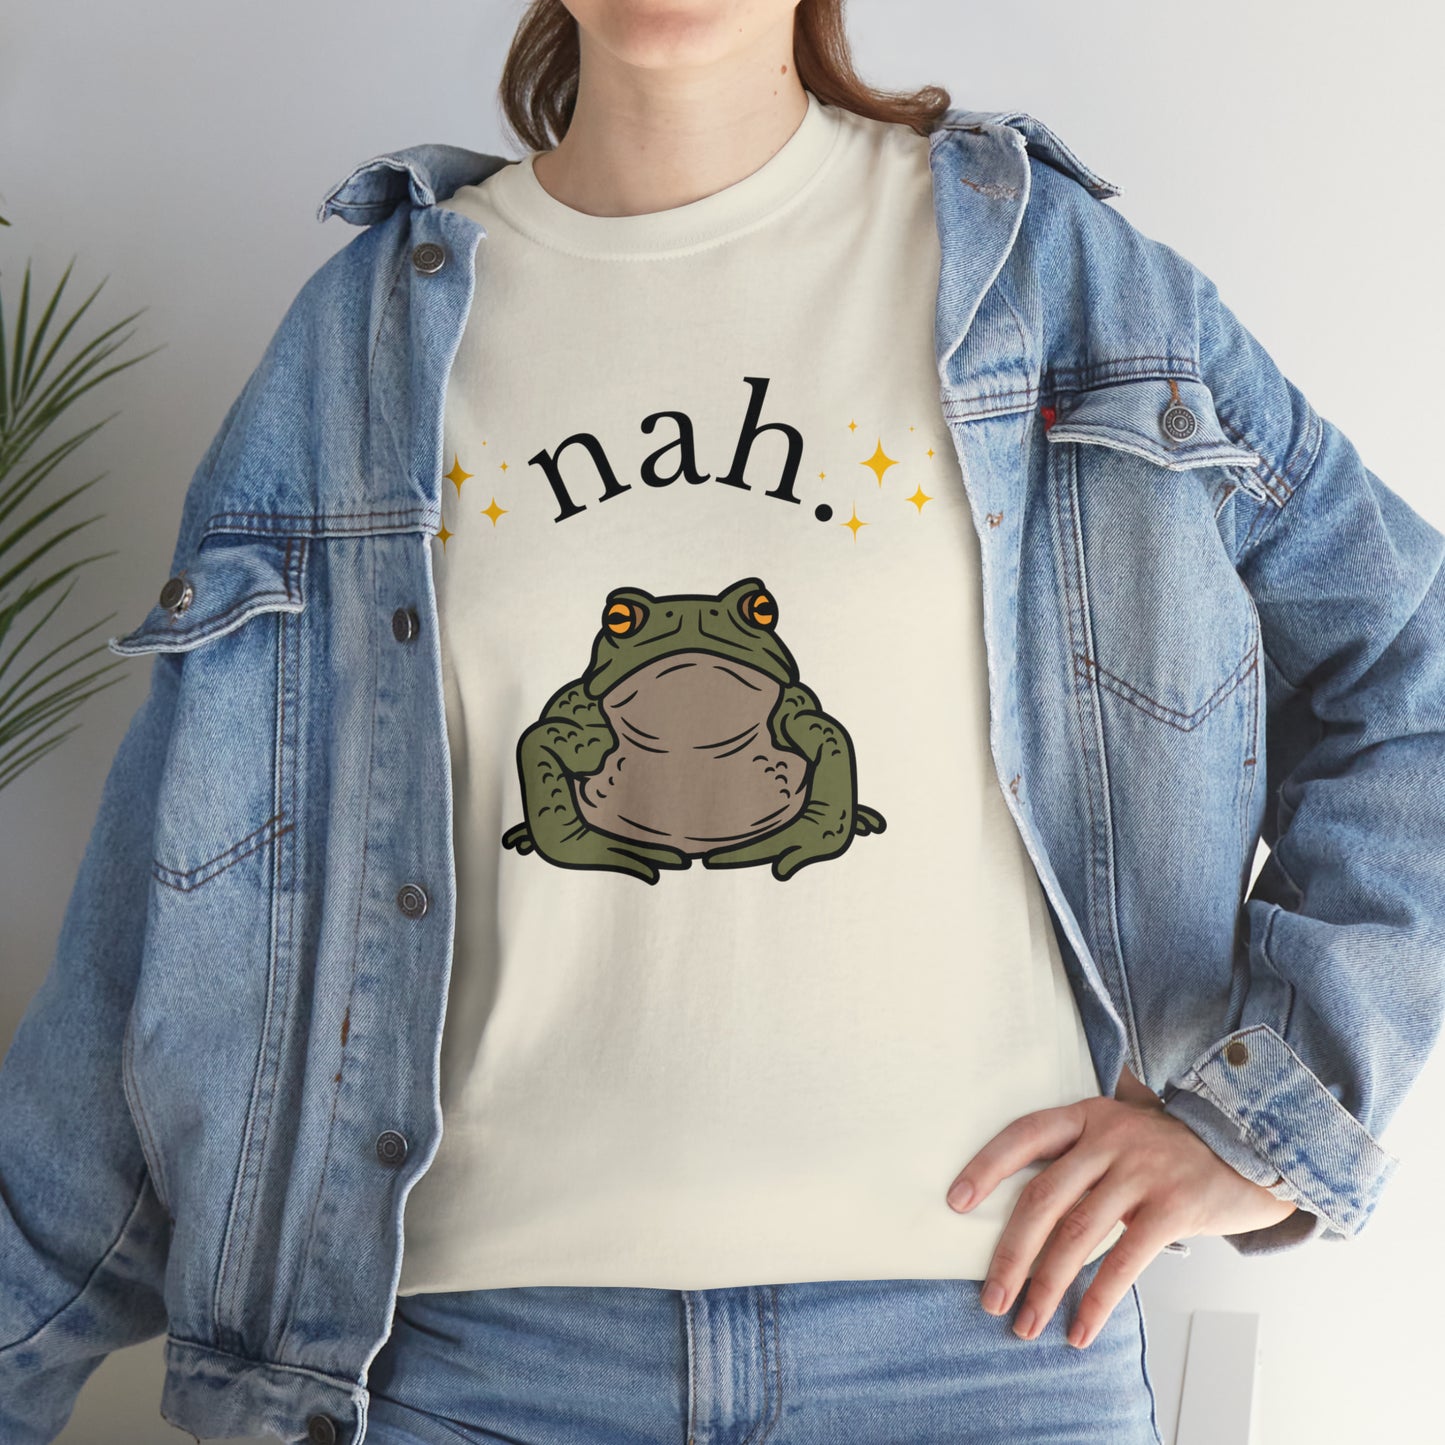 nah lazy toad gildan heavy shirt